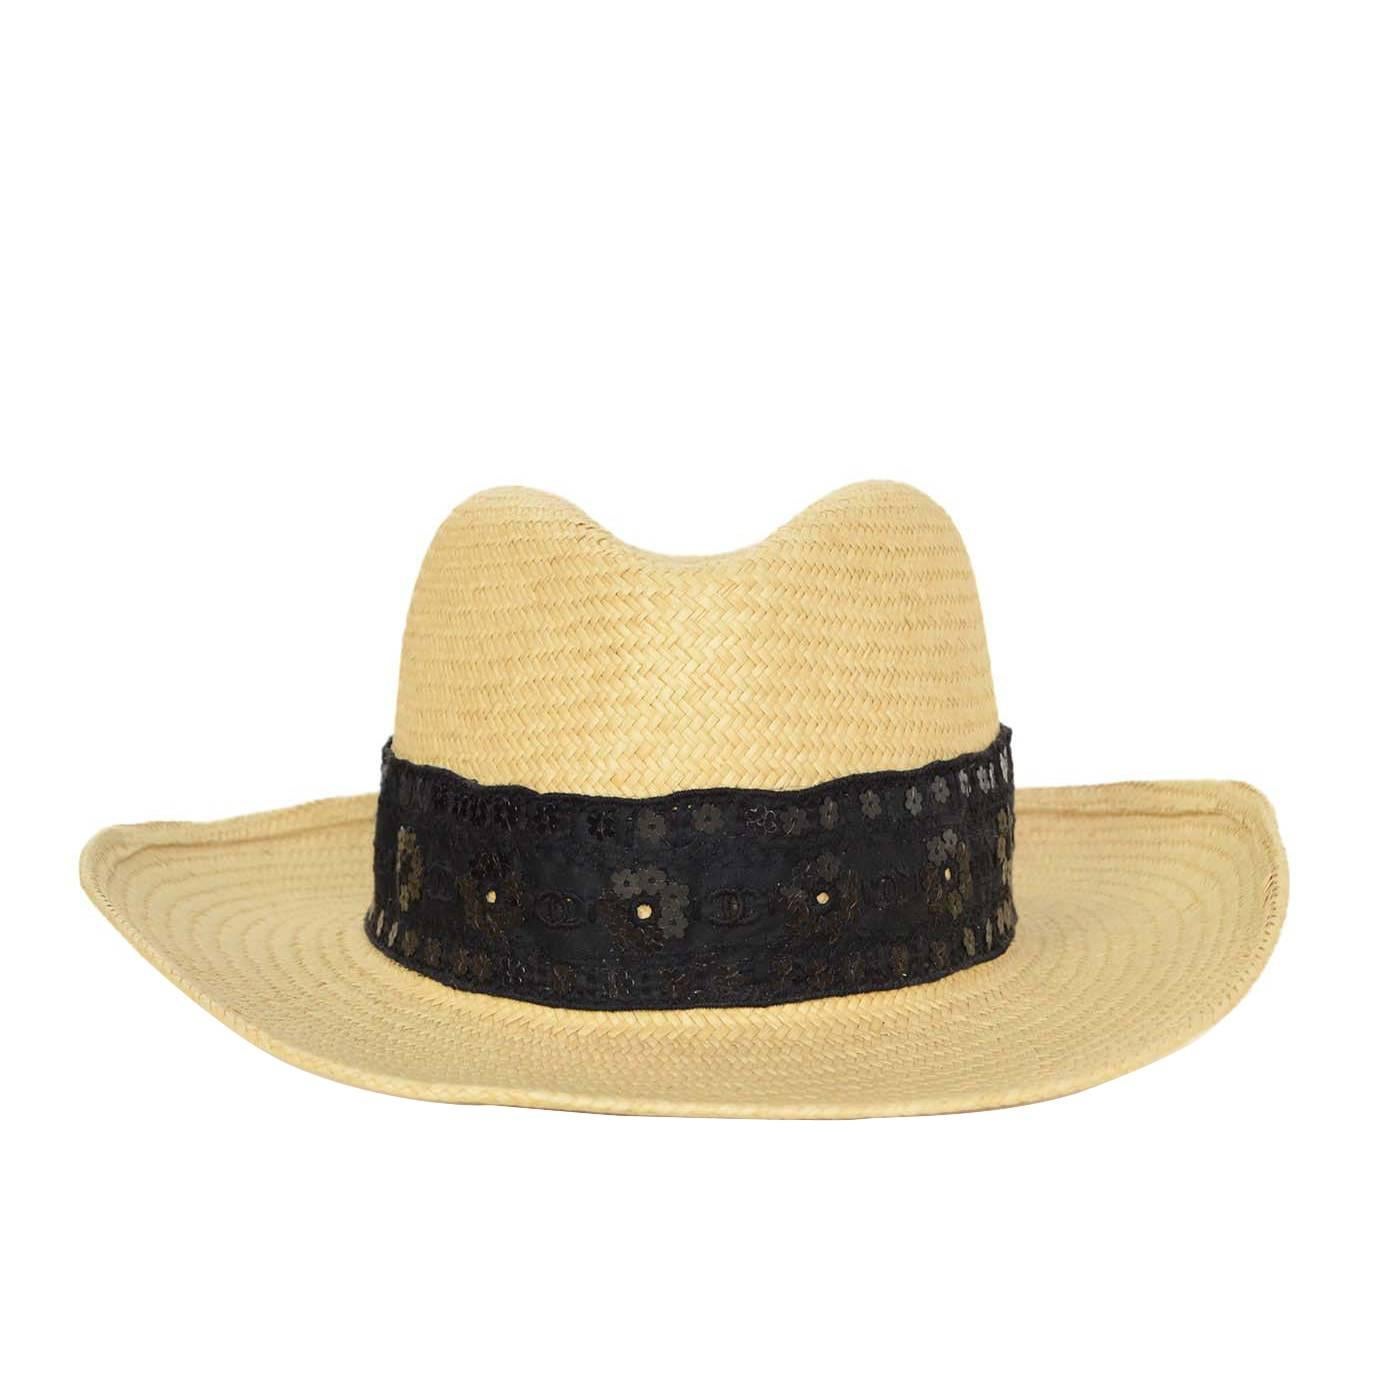 Chanel Natural Straw Panama Hat sz 57